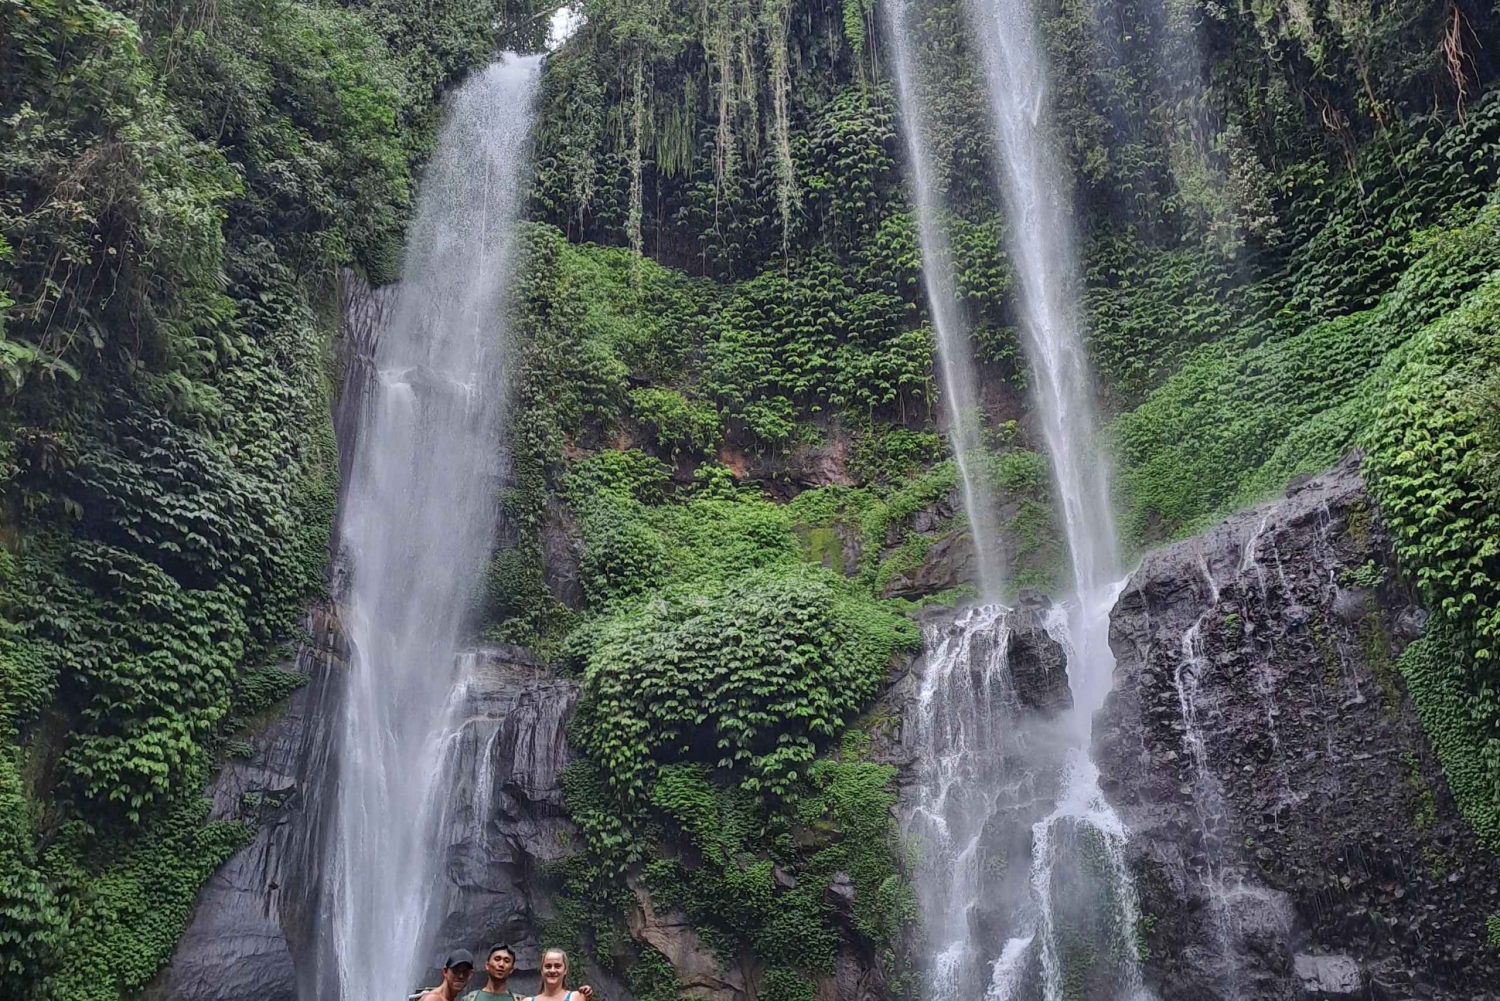 Bali Northern Trip : Circuit des chutes d'eau majestueuses